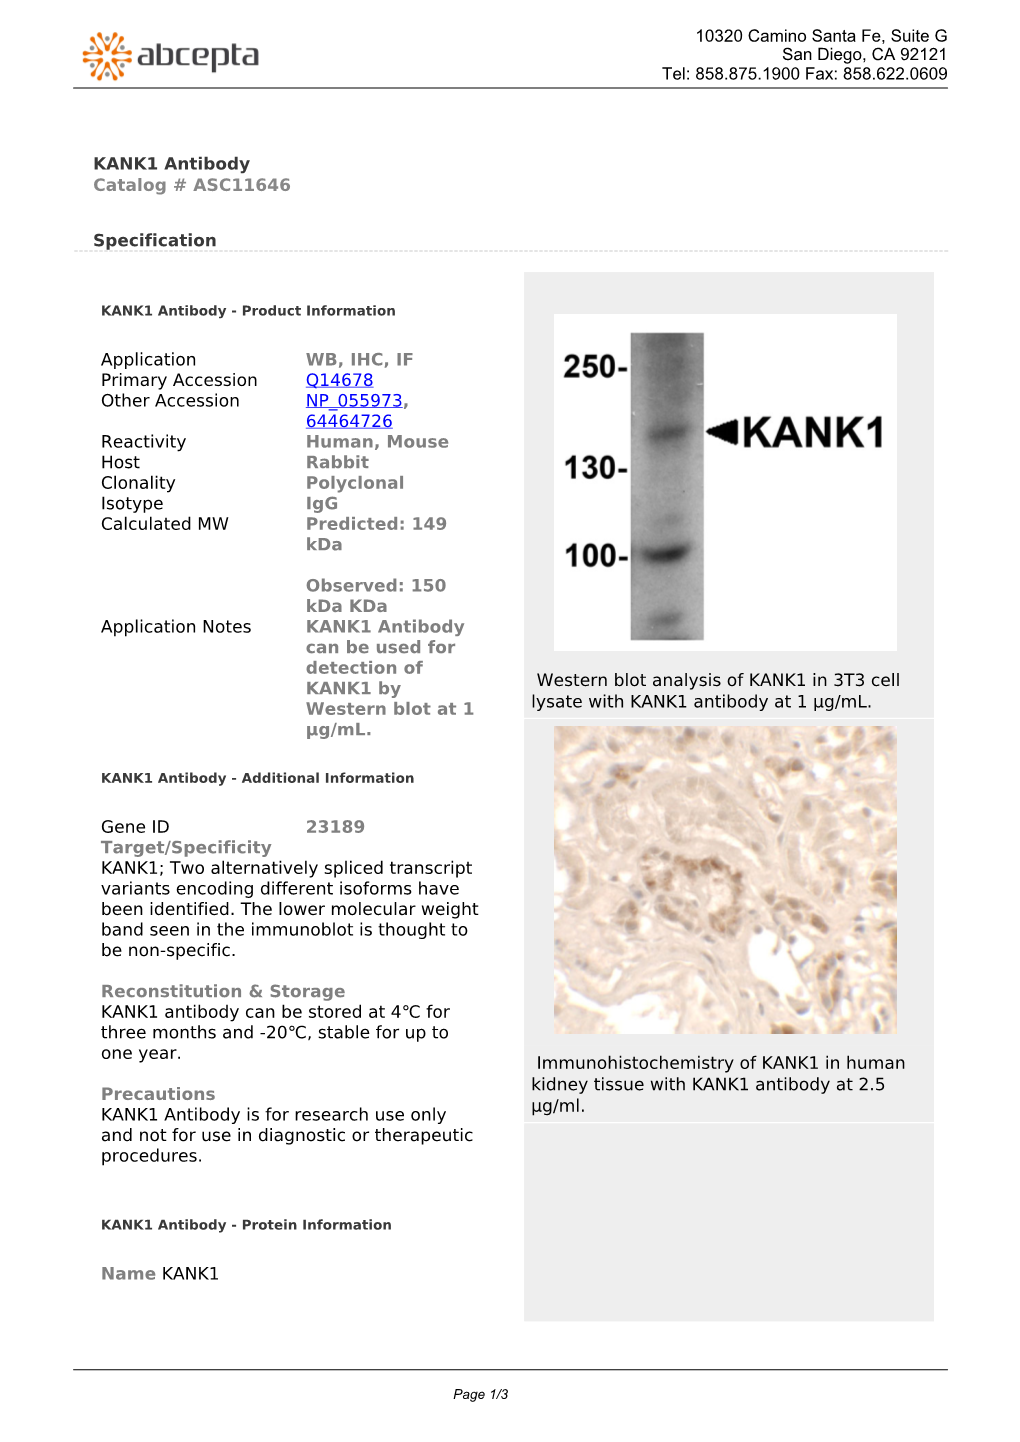 KANK1 Antibody Catalog # ASC11646